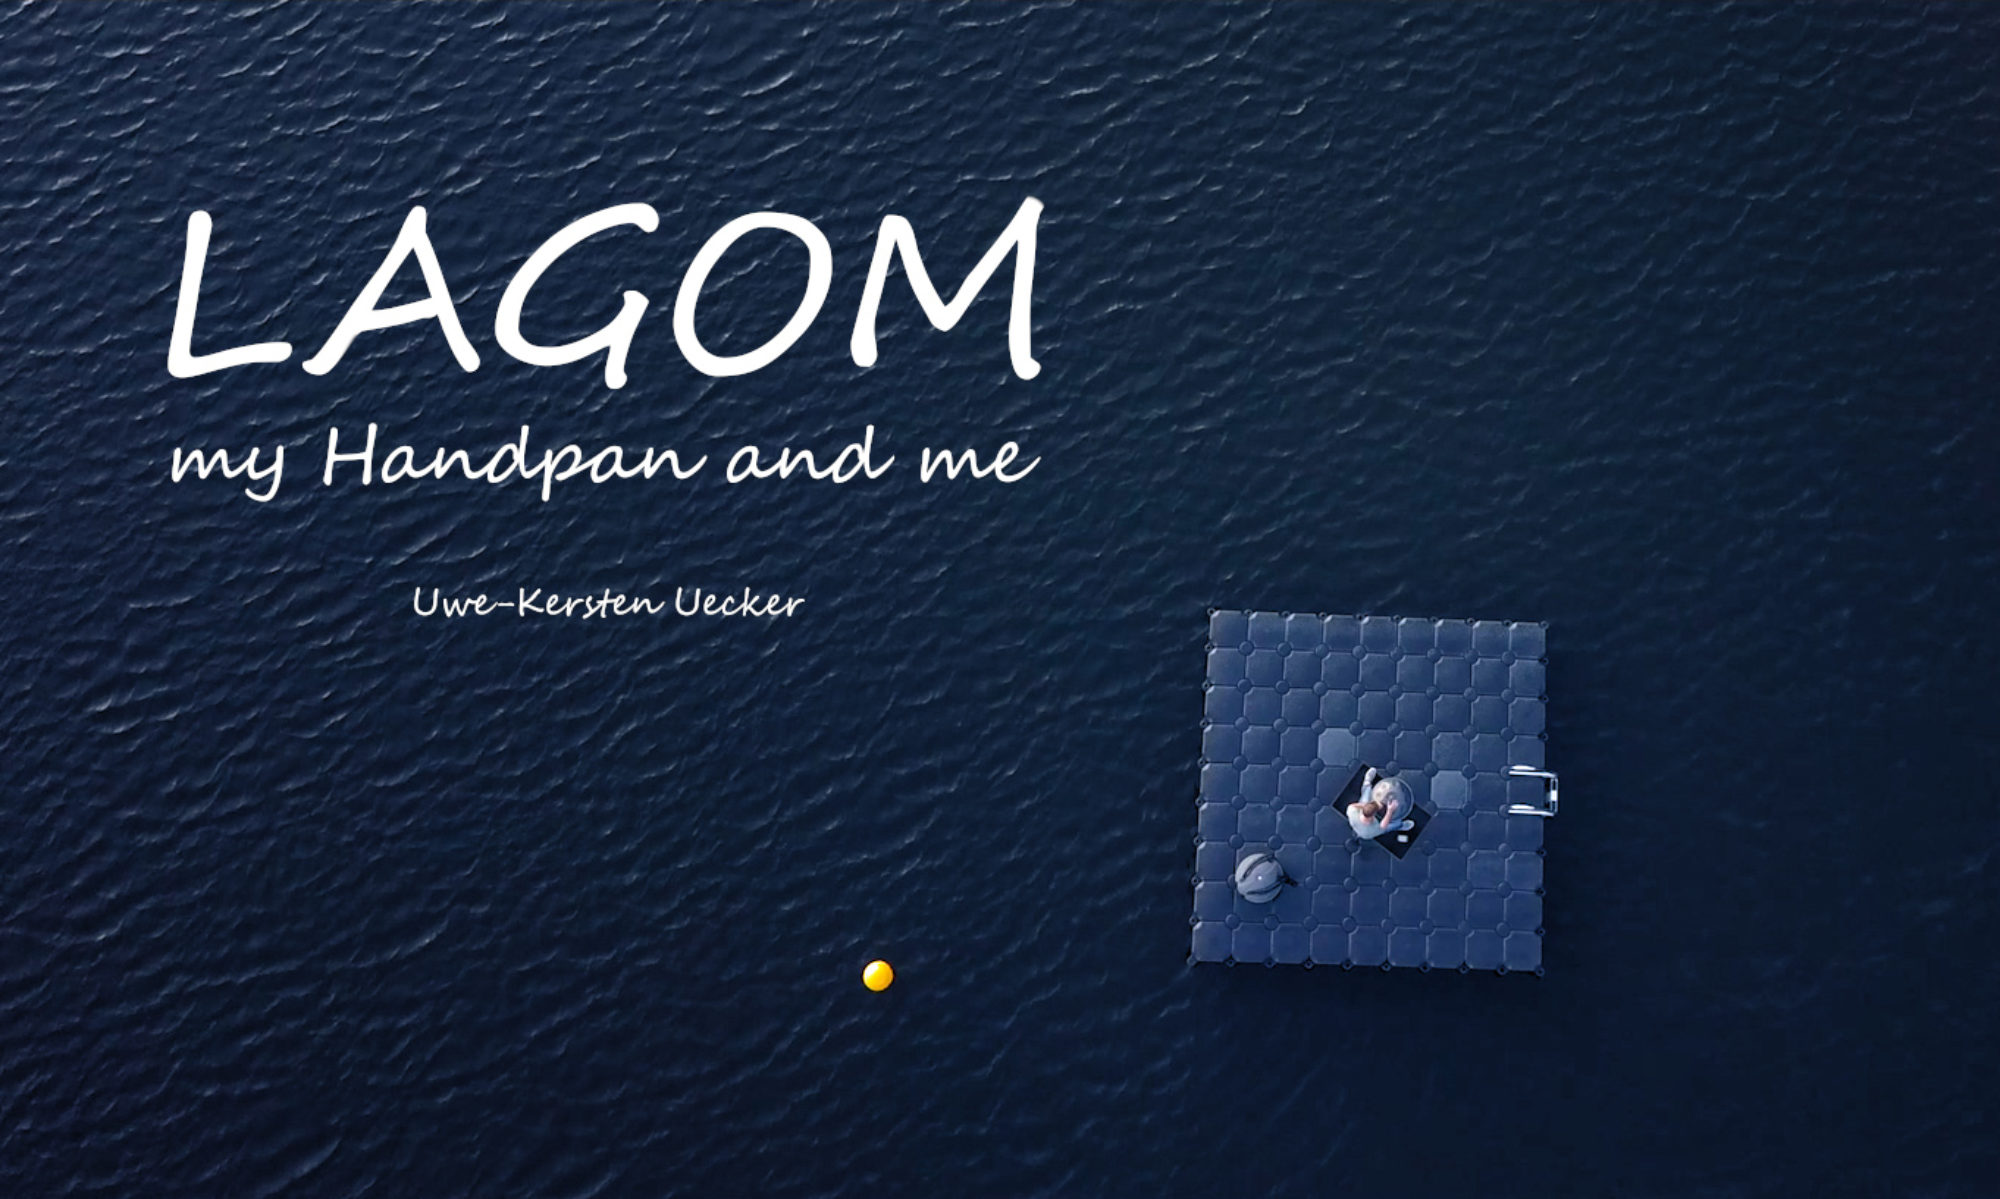 Lagom - my Handpan and me